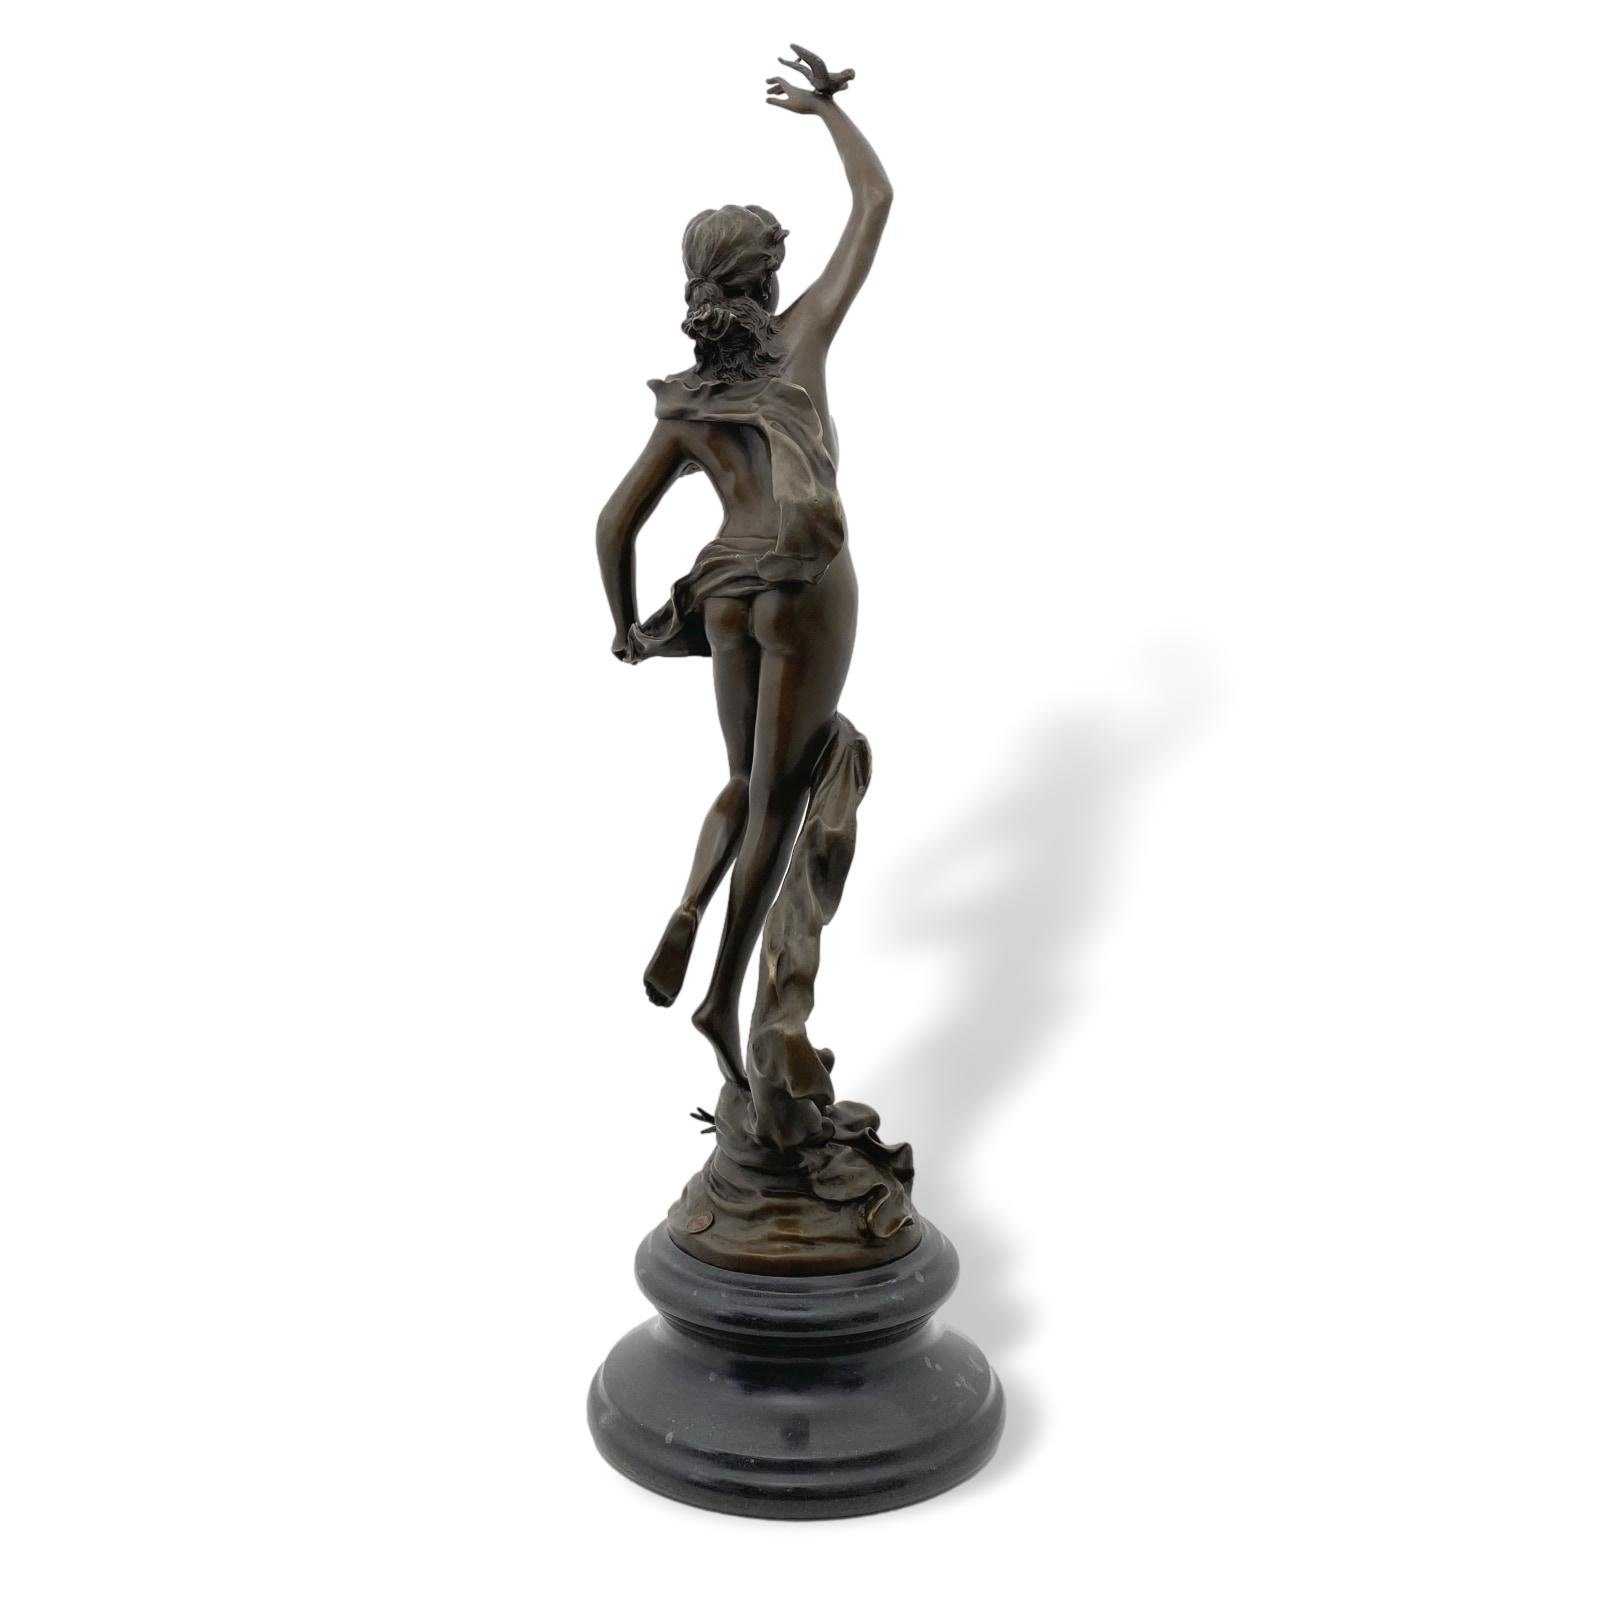 Aubaho Skulptur Bronzeskulptur Antik-Stil Bronze Moreau 72cm Re Akt Kopie Figur nach 